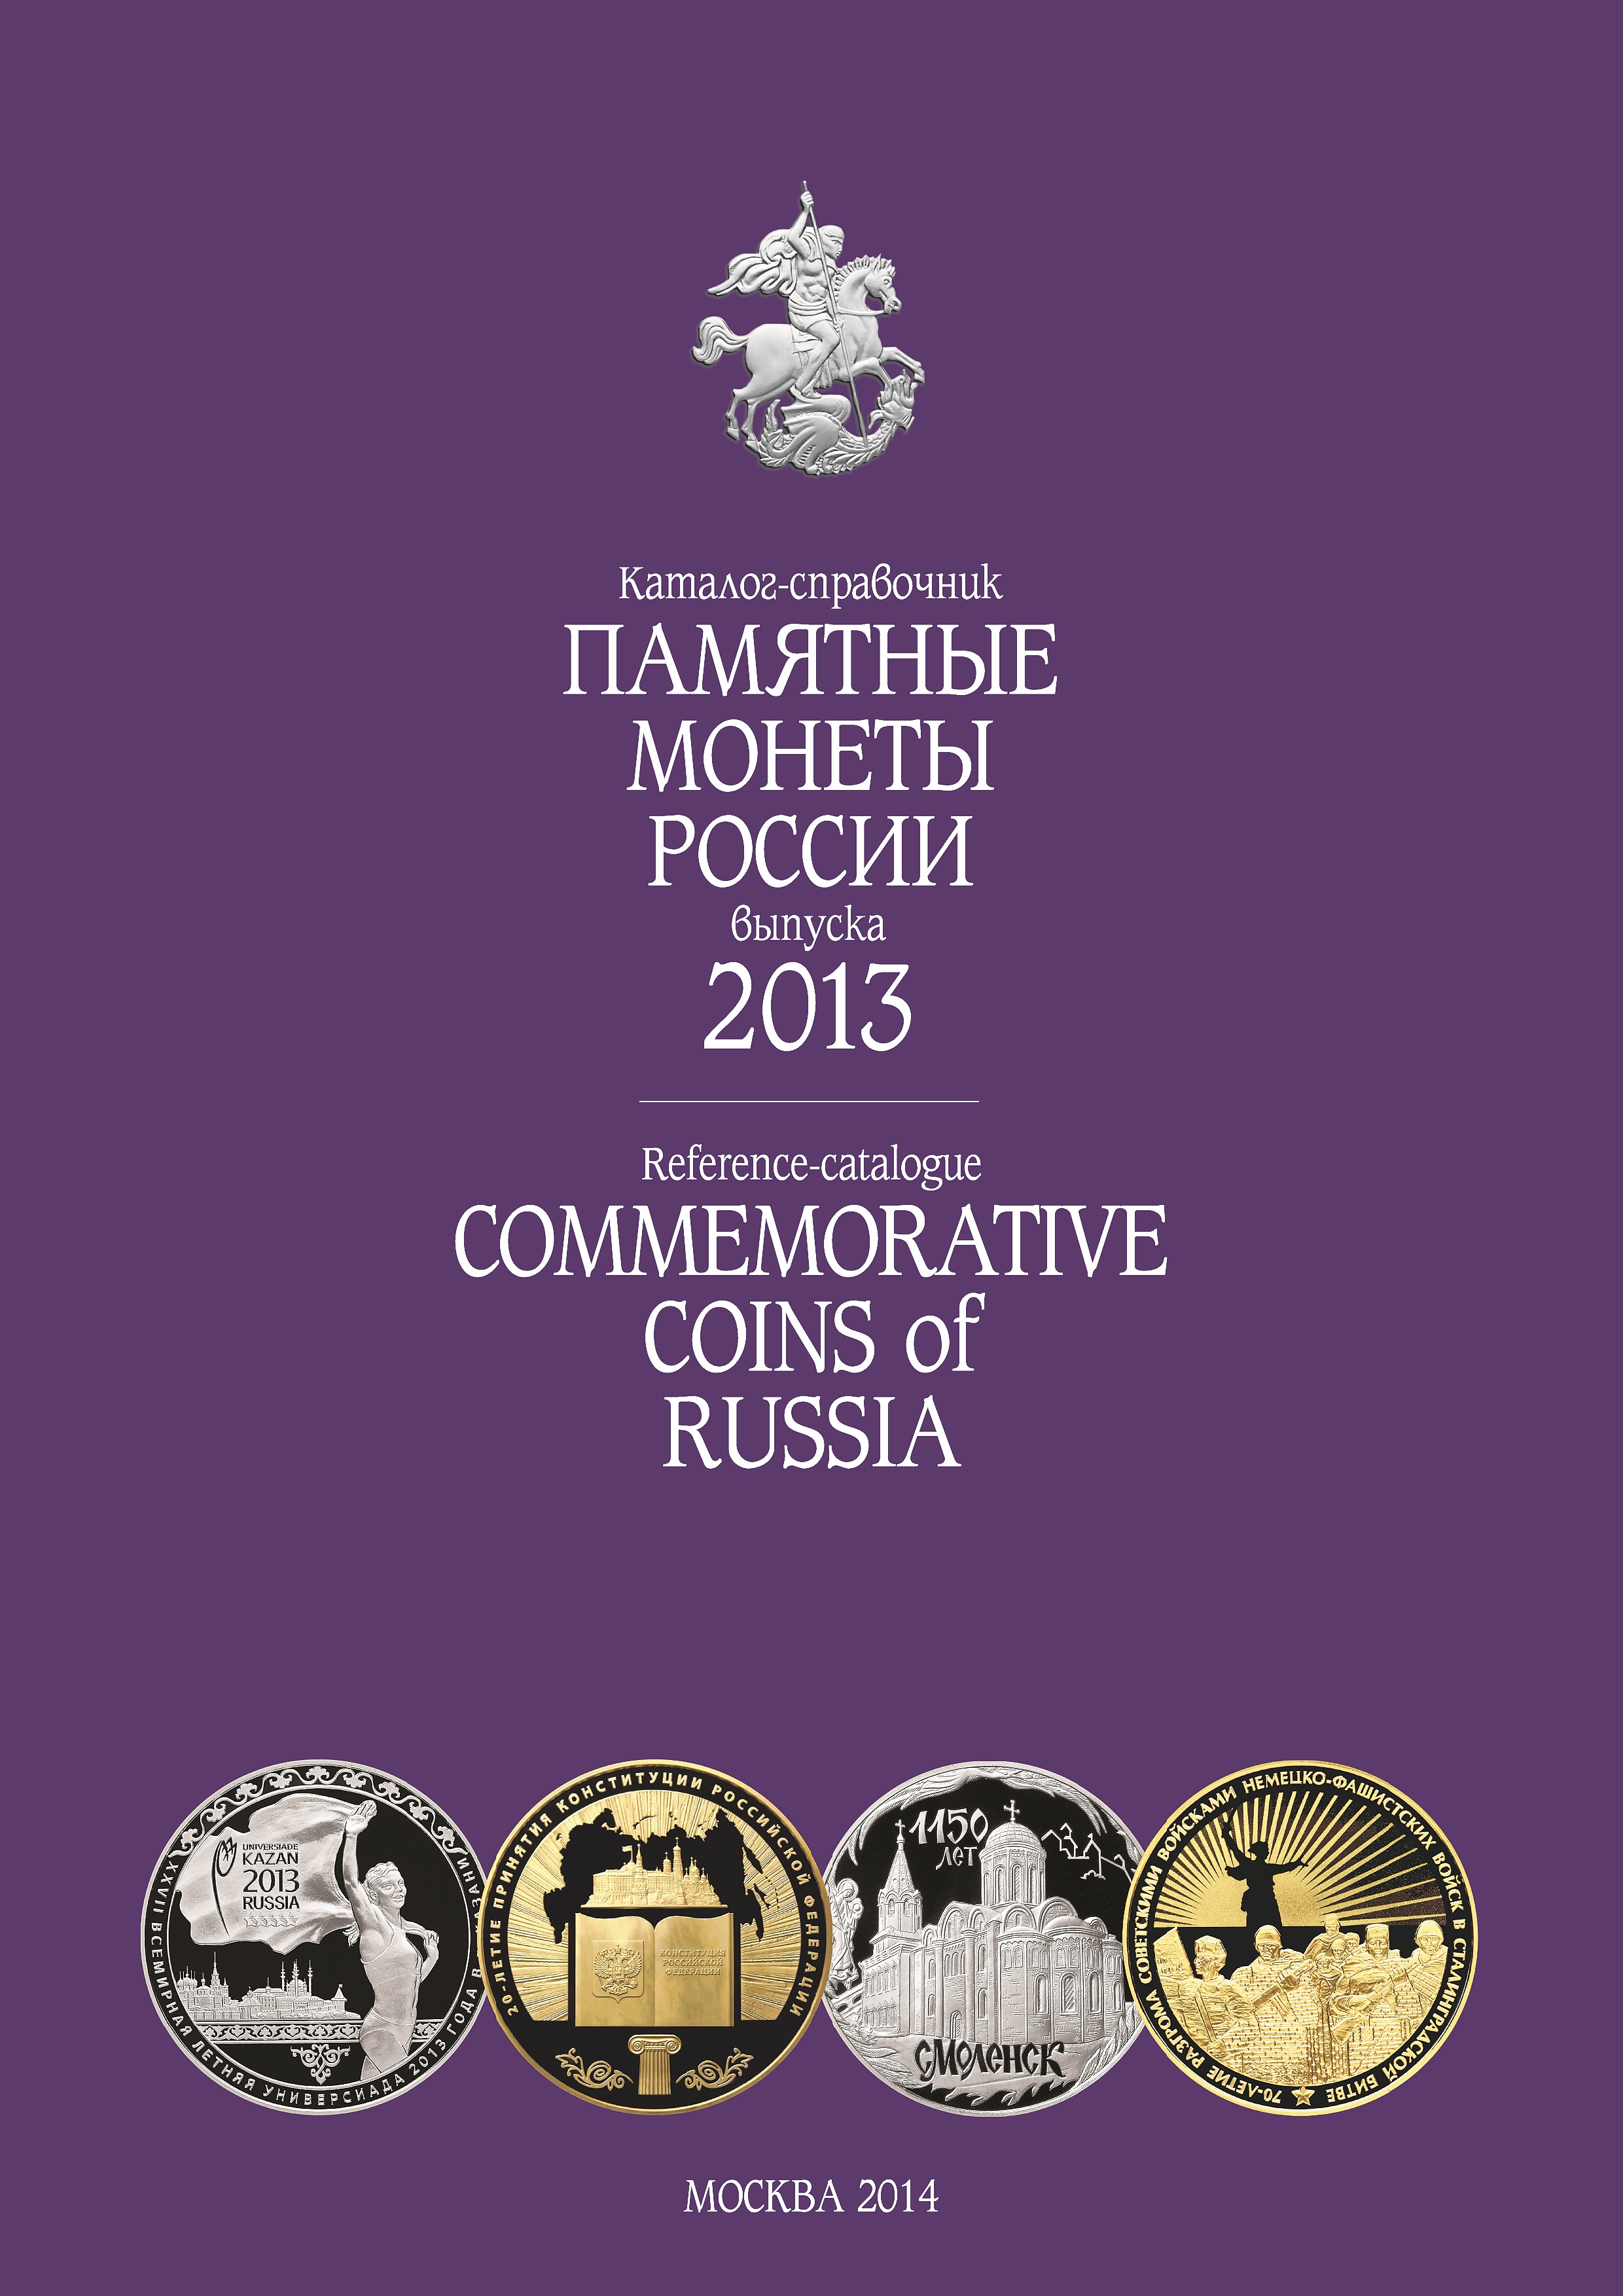 Commemorative Coins of Russia, 2013